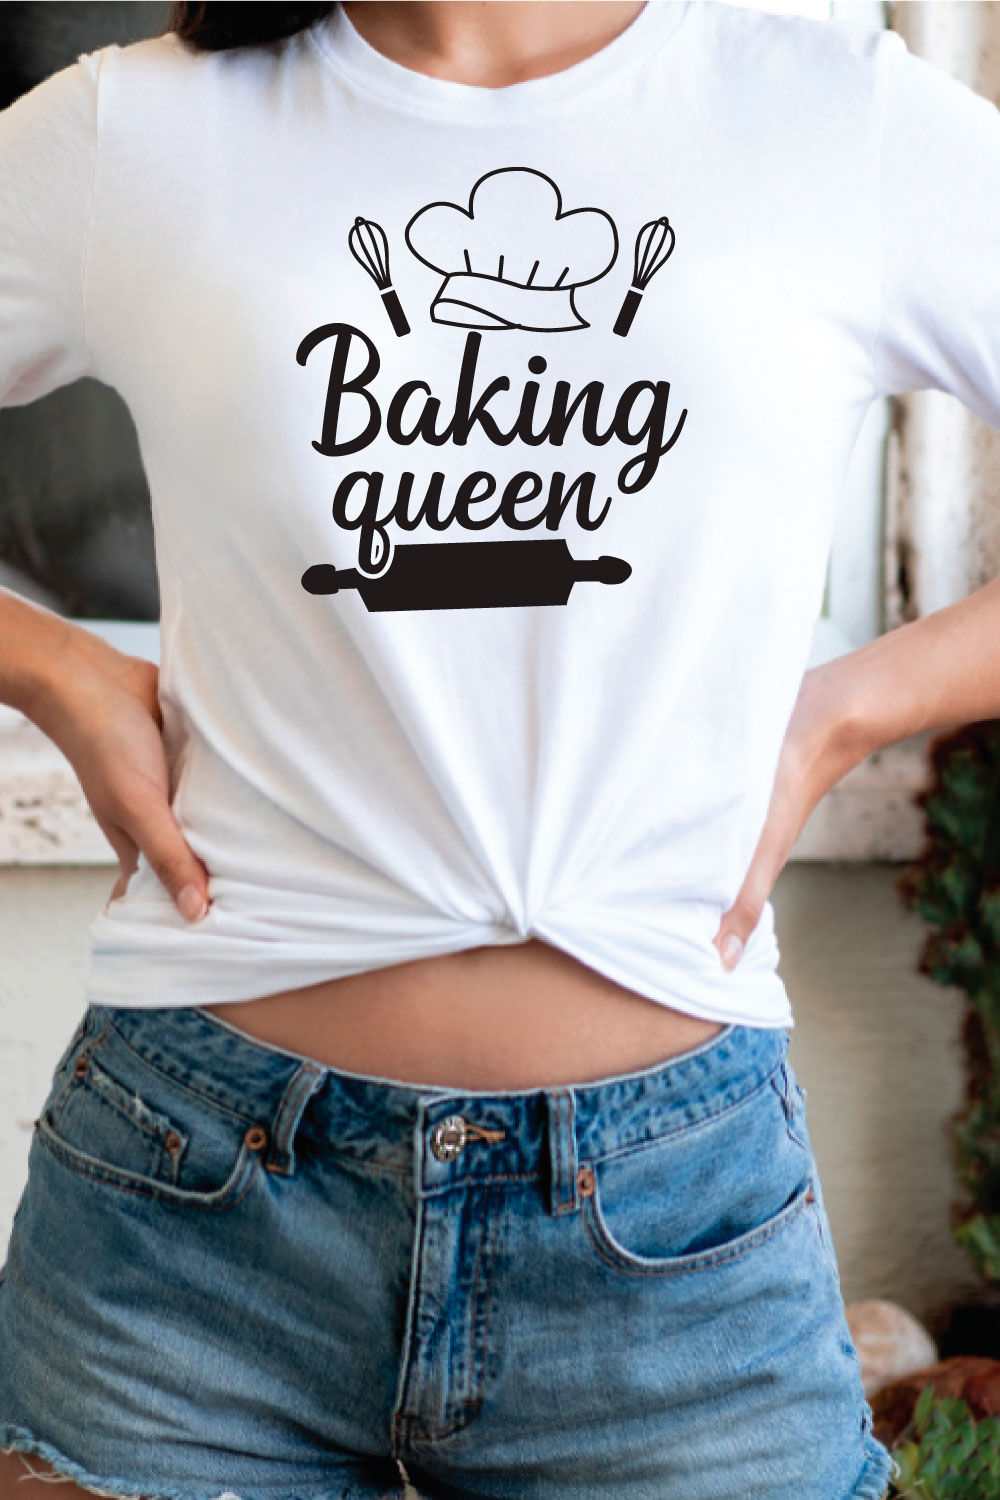 baking queen svg pinterest preview image.